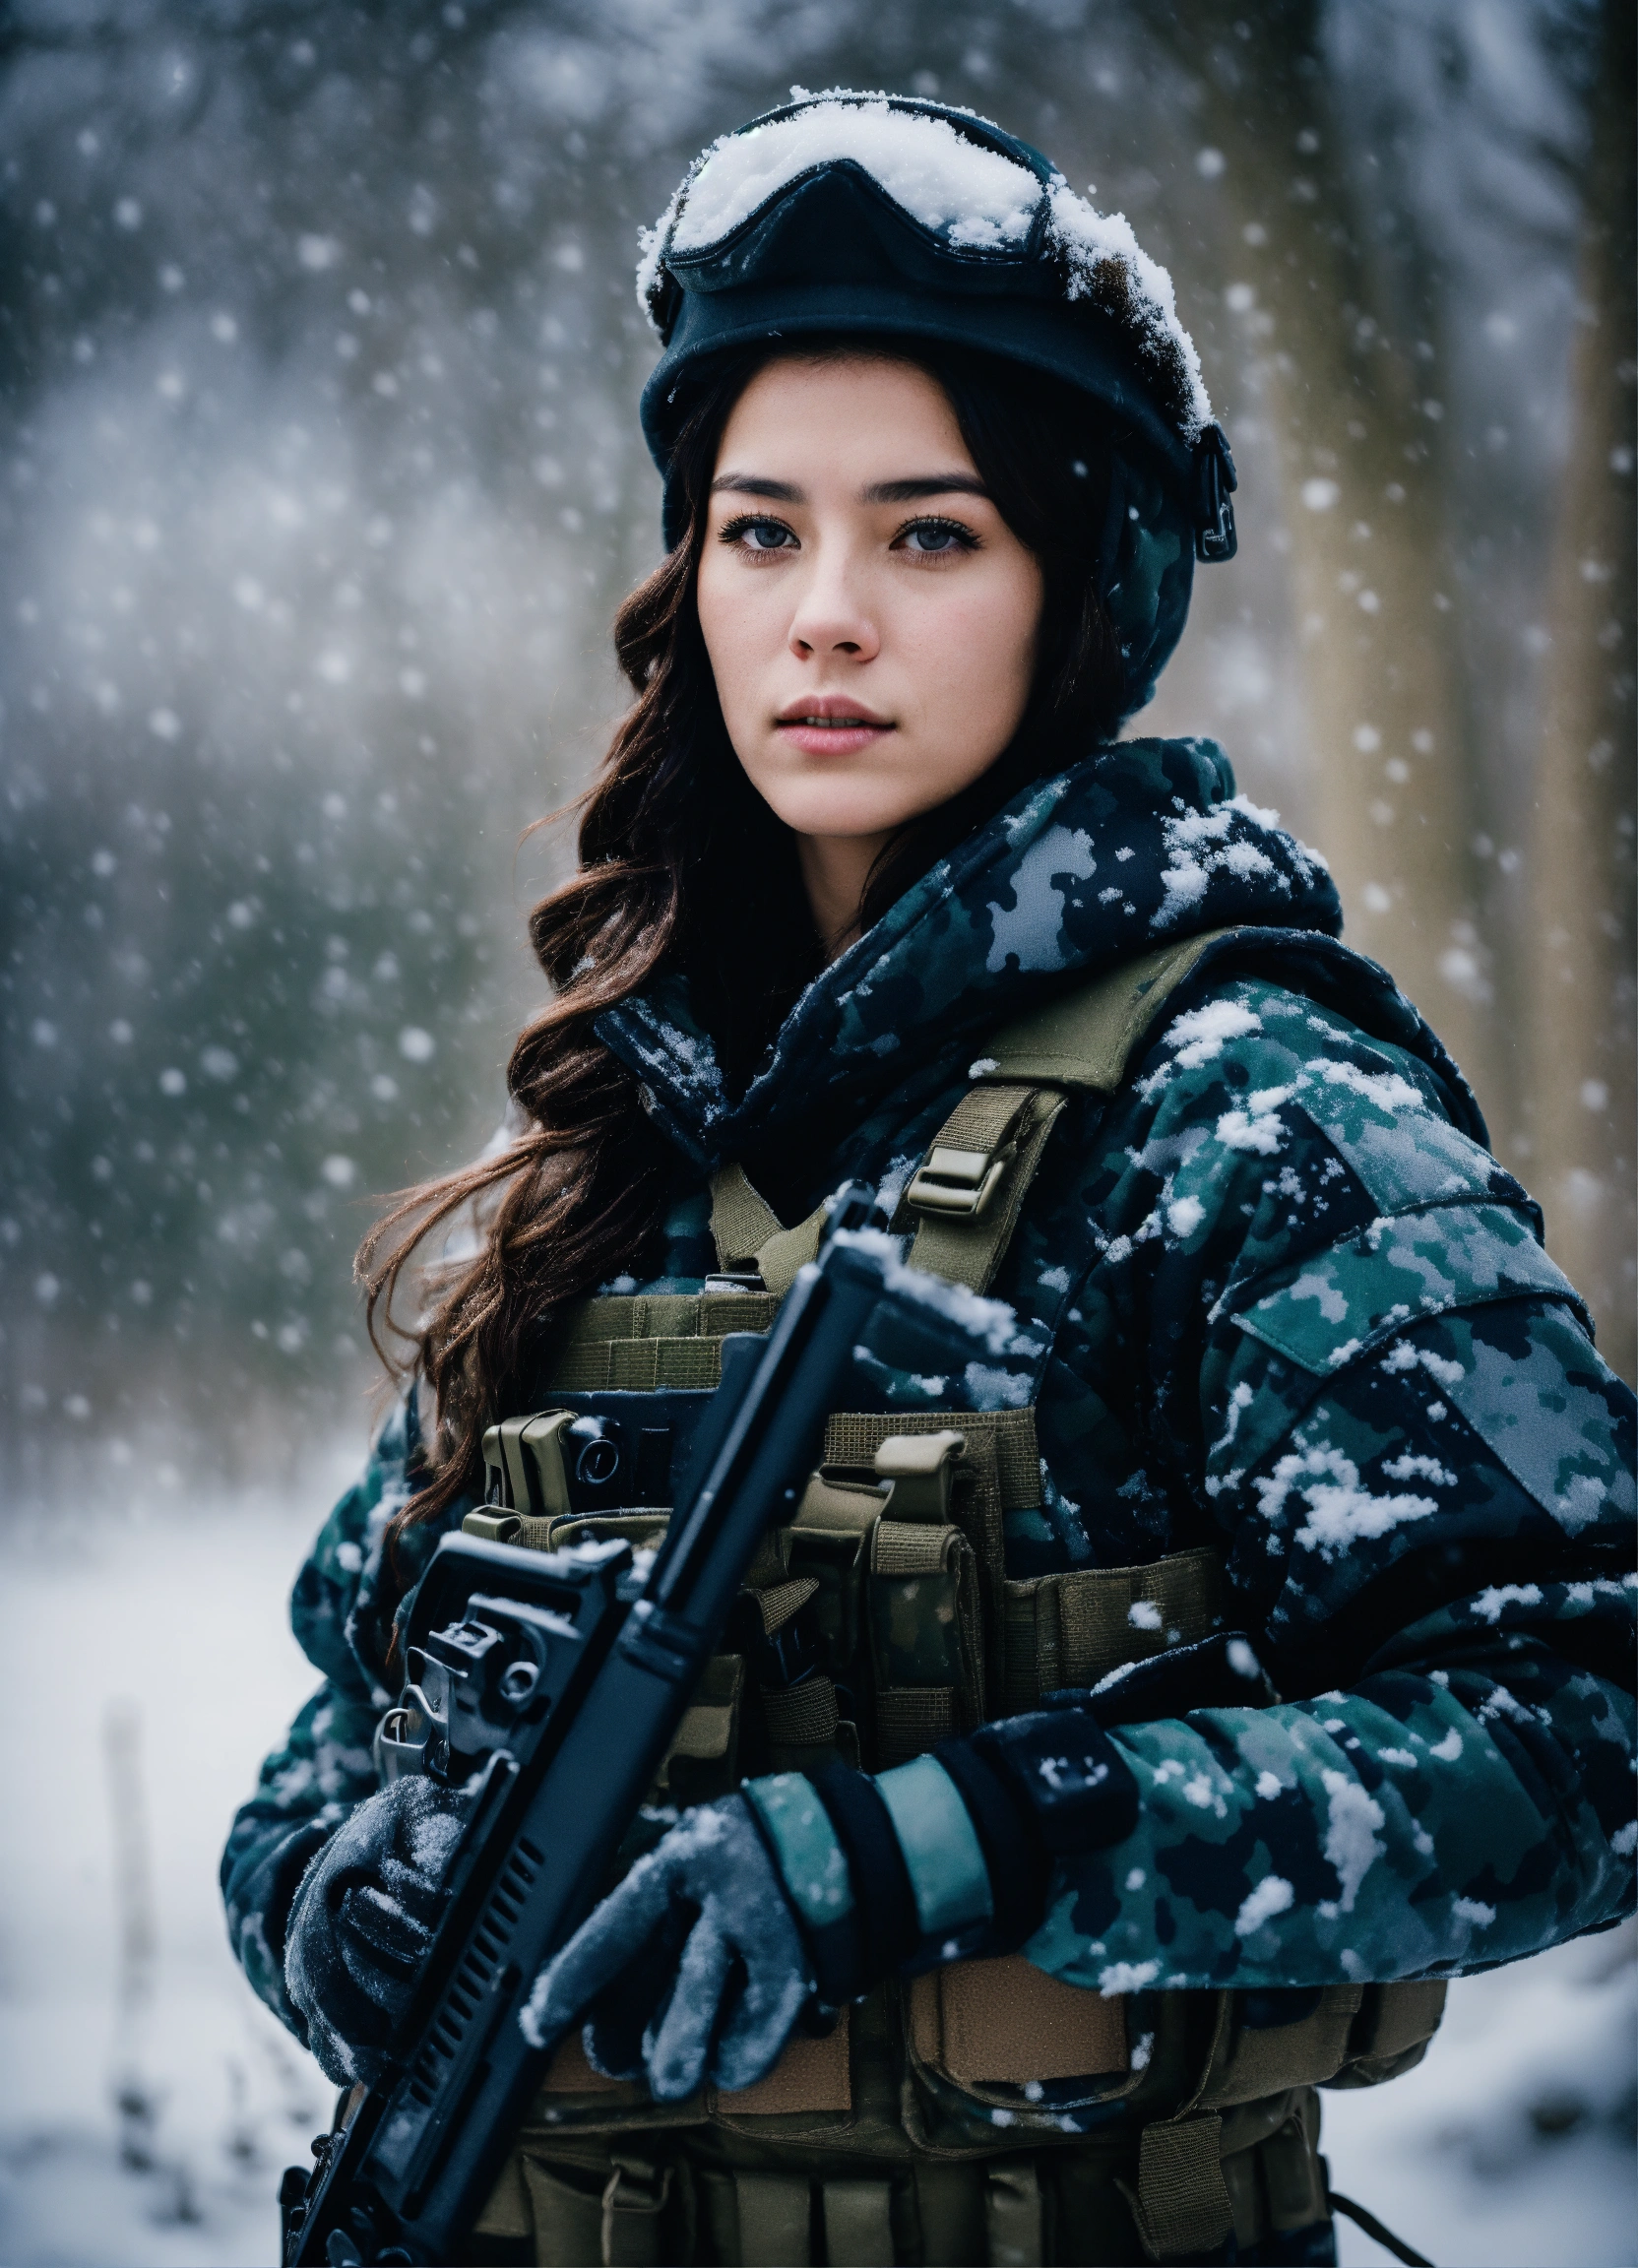 Lexica - A beautiful brunette soldier girl, wearing winter camo